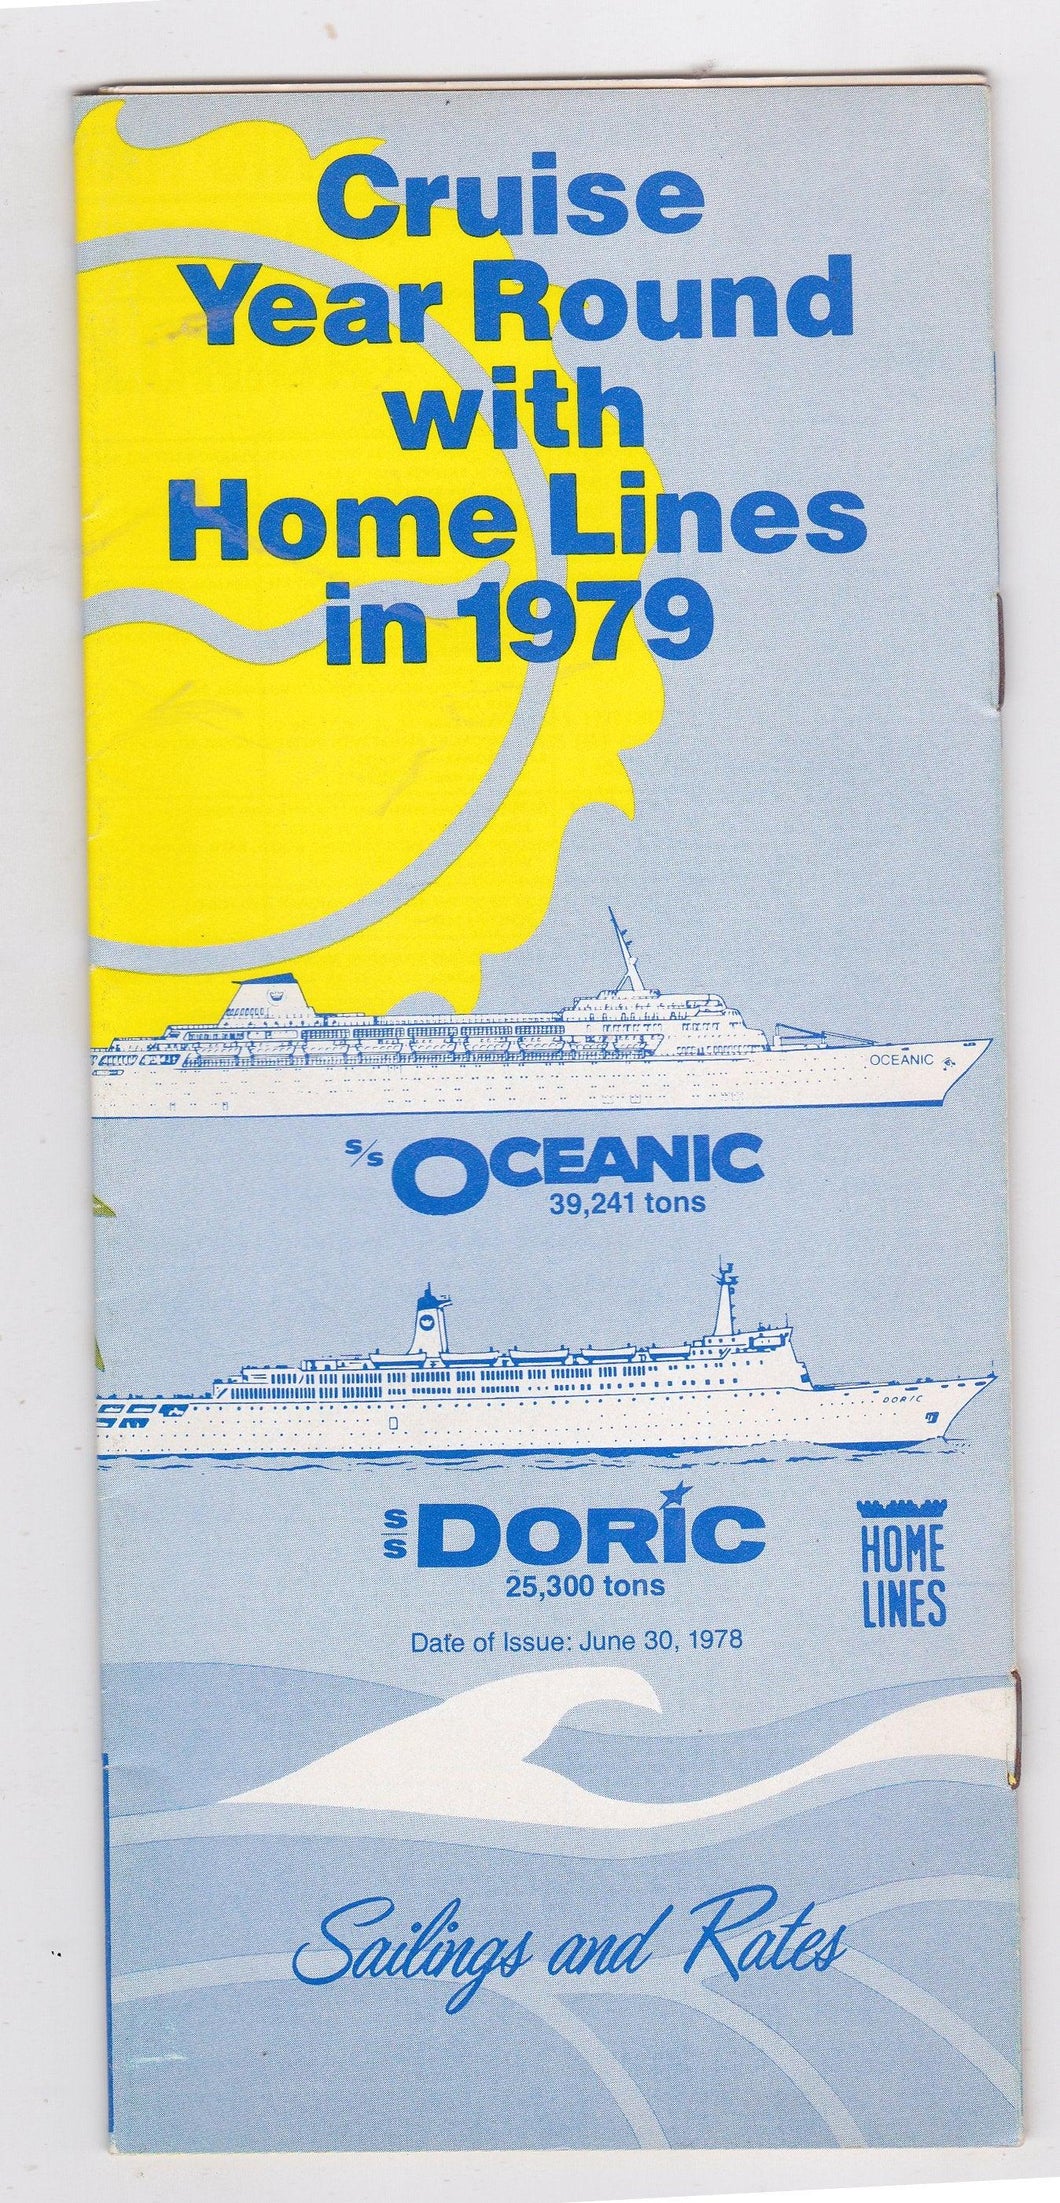 Home Lines ss Oceanic ss Doric 1979 Cruise Ship Brochure - TulipStuff